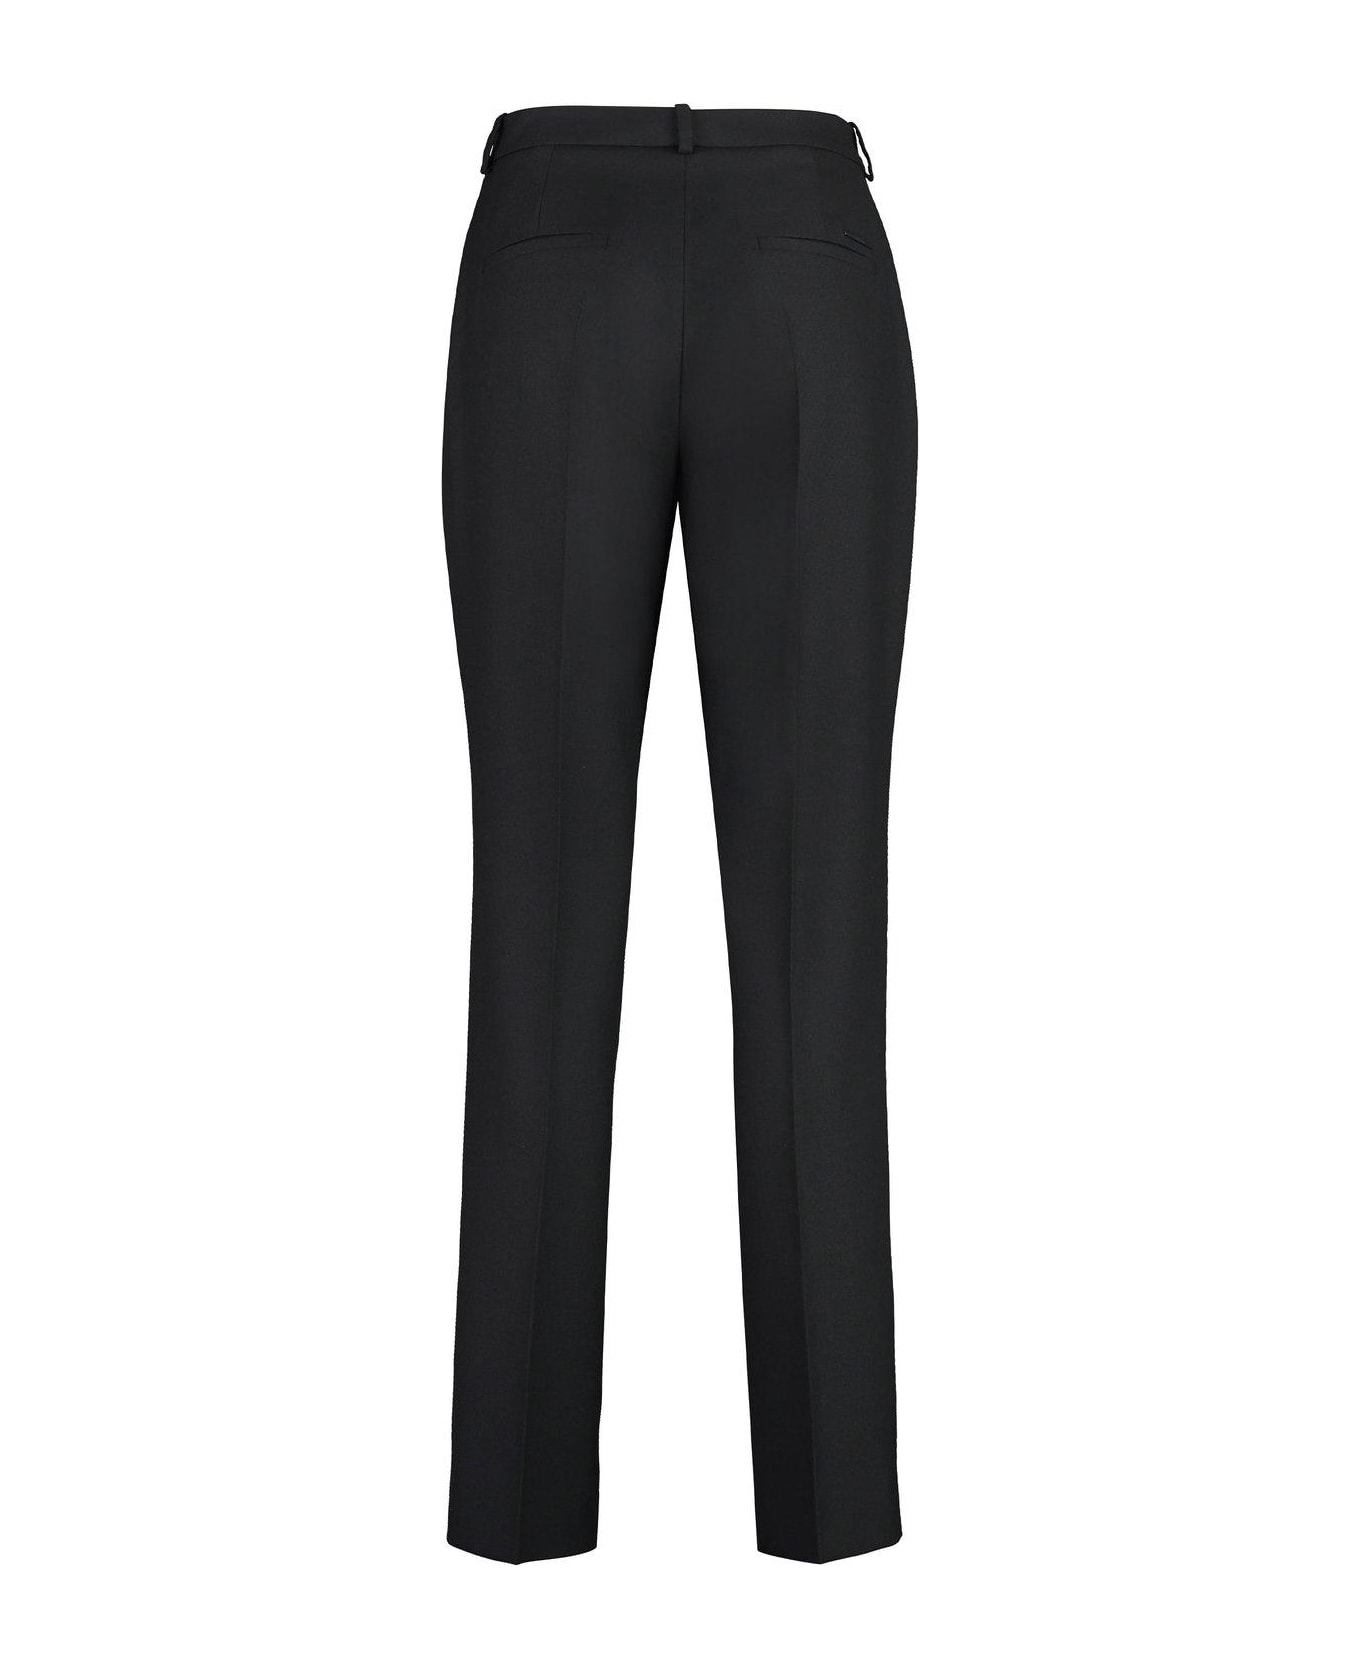 Calvin Klein Pleat Tailored Trousers - Black